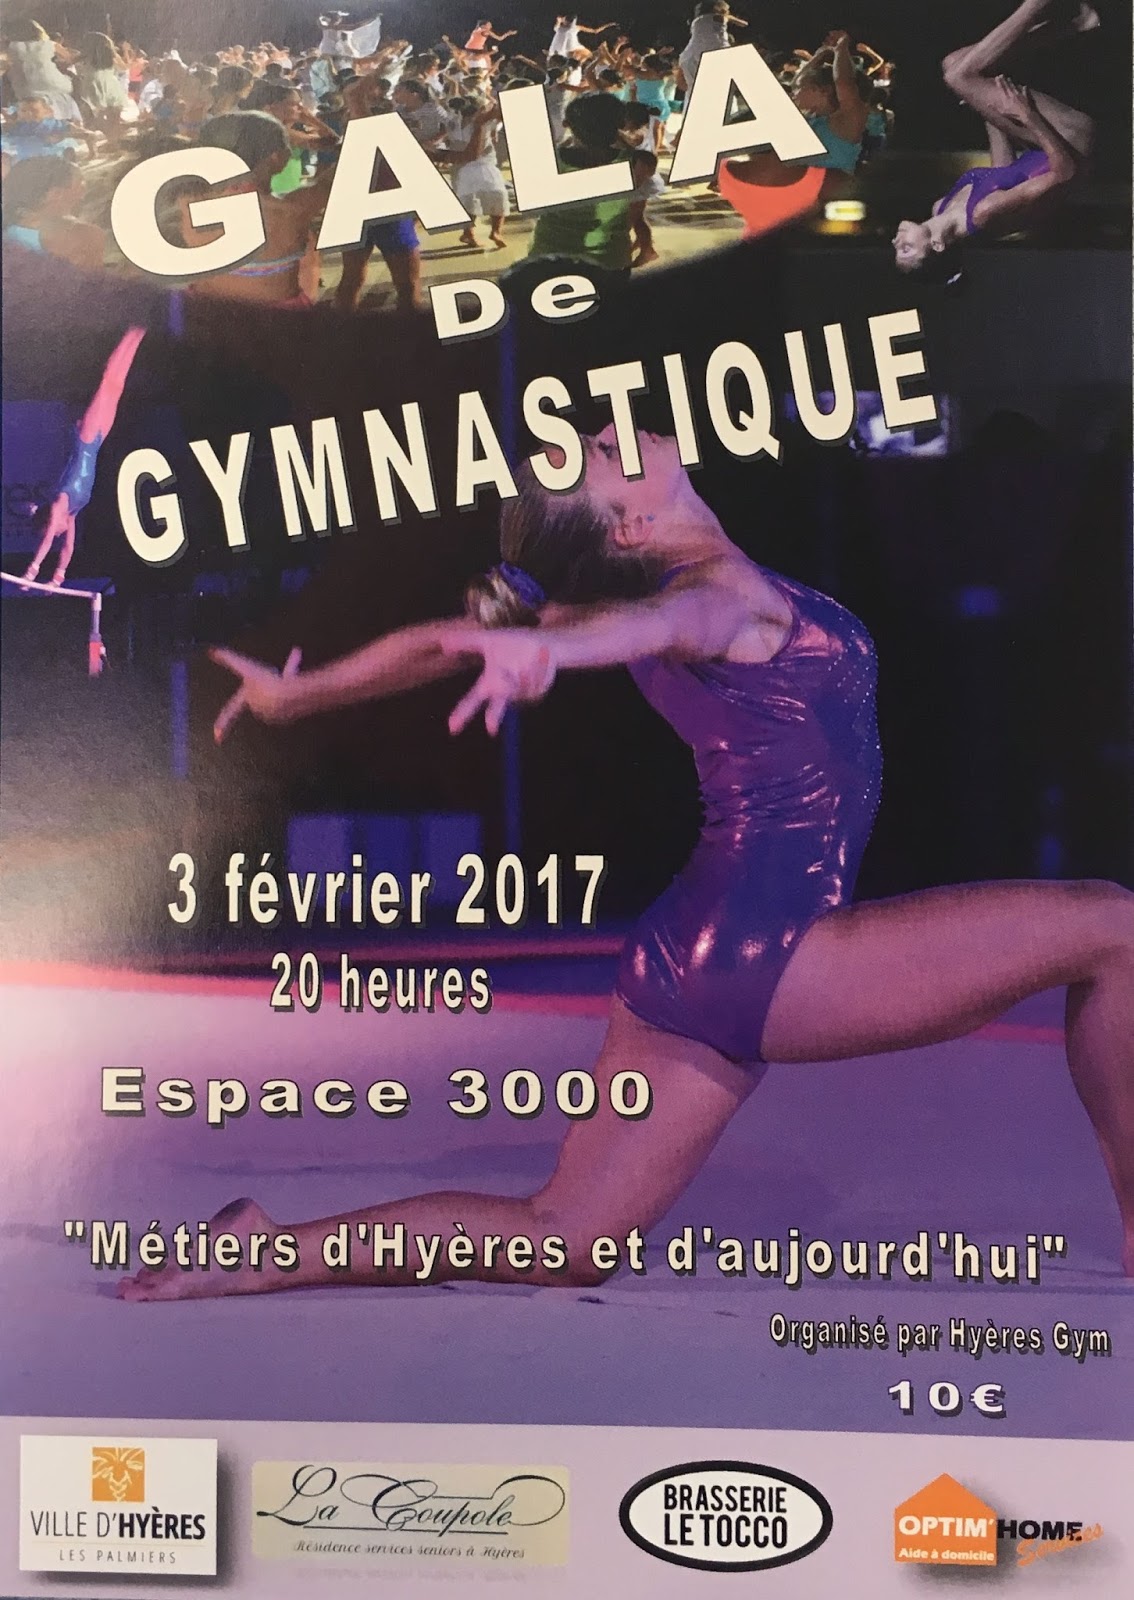 Hyères Gym: janvier 2017